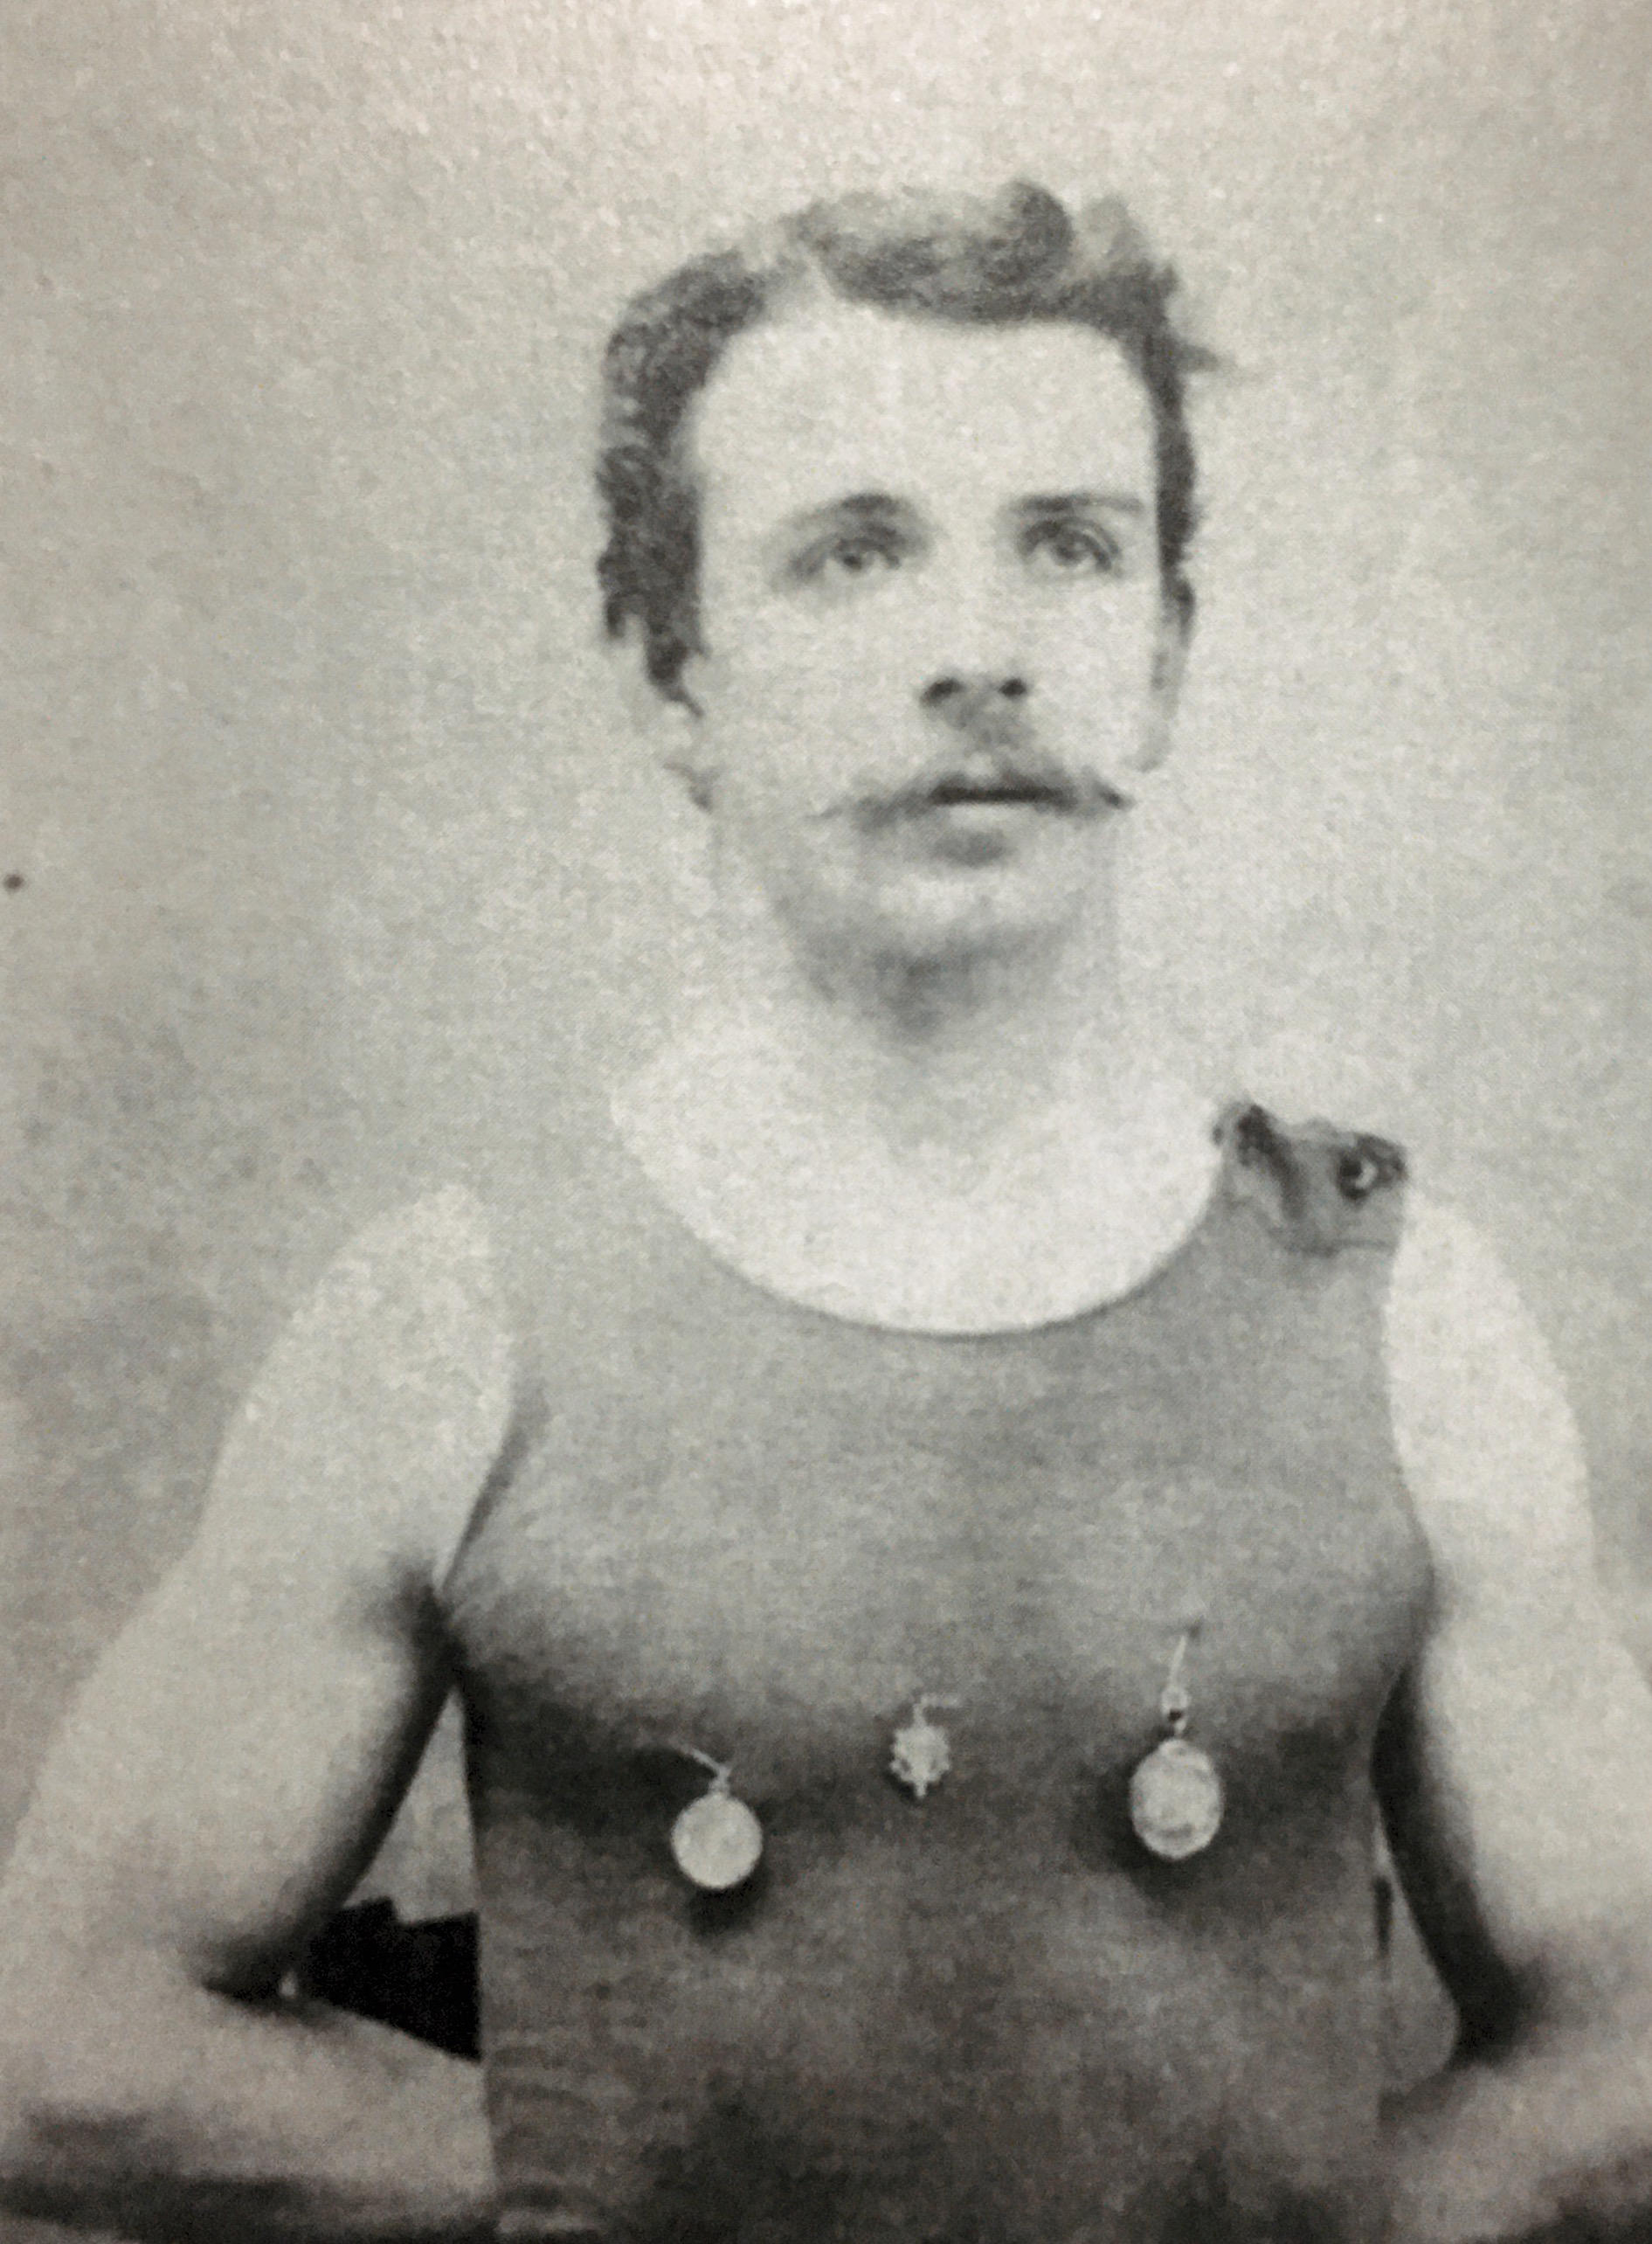 John (Jack Richardson) gold medal winner for 60 yards breaststroke at The Valley Pool in Brisbane in 1910.